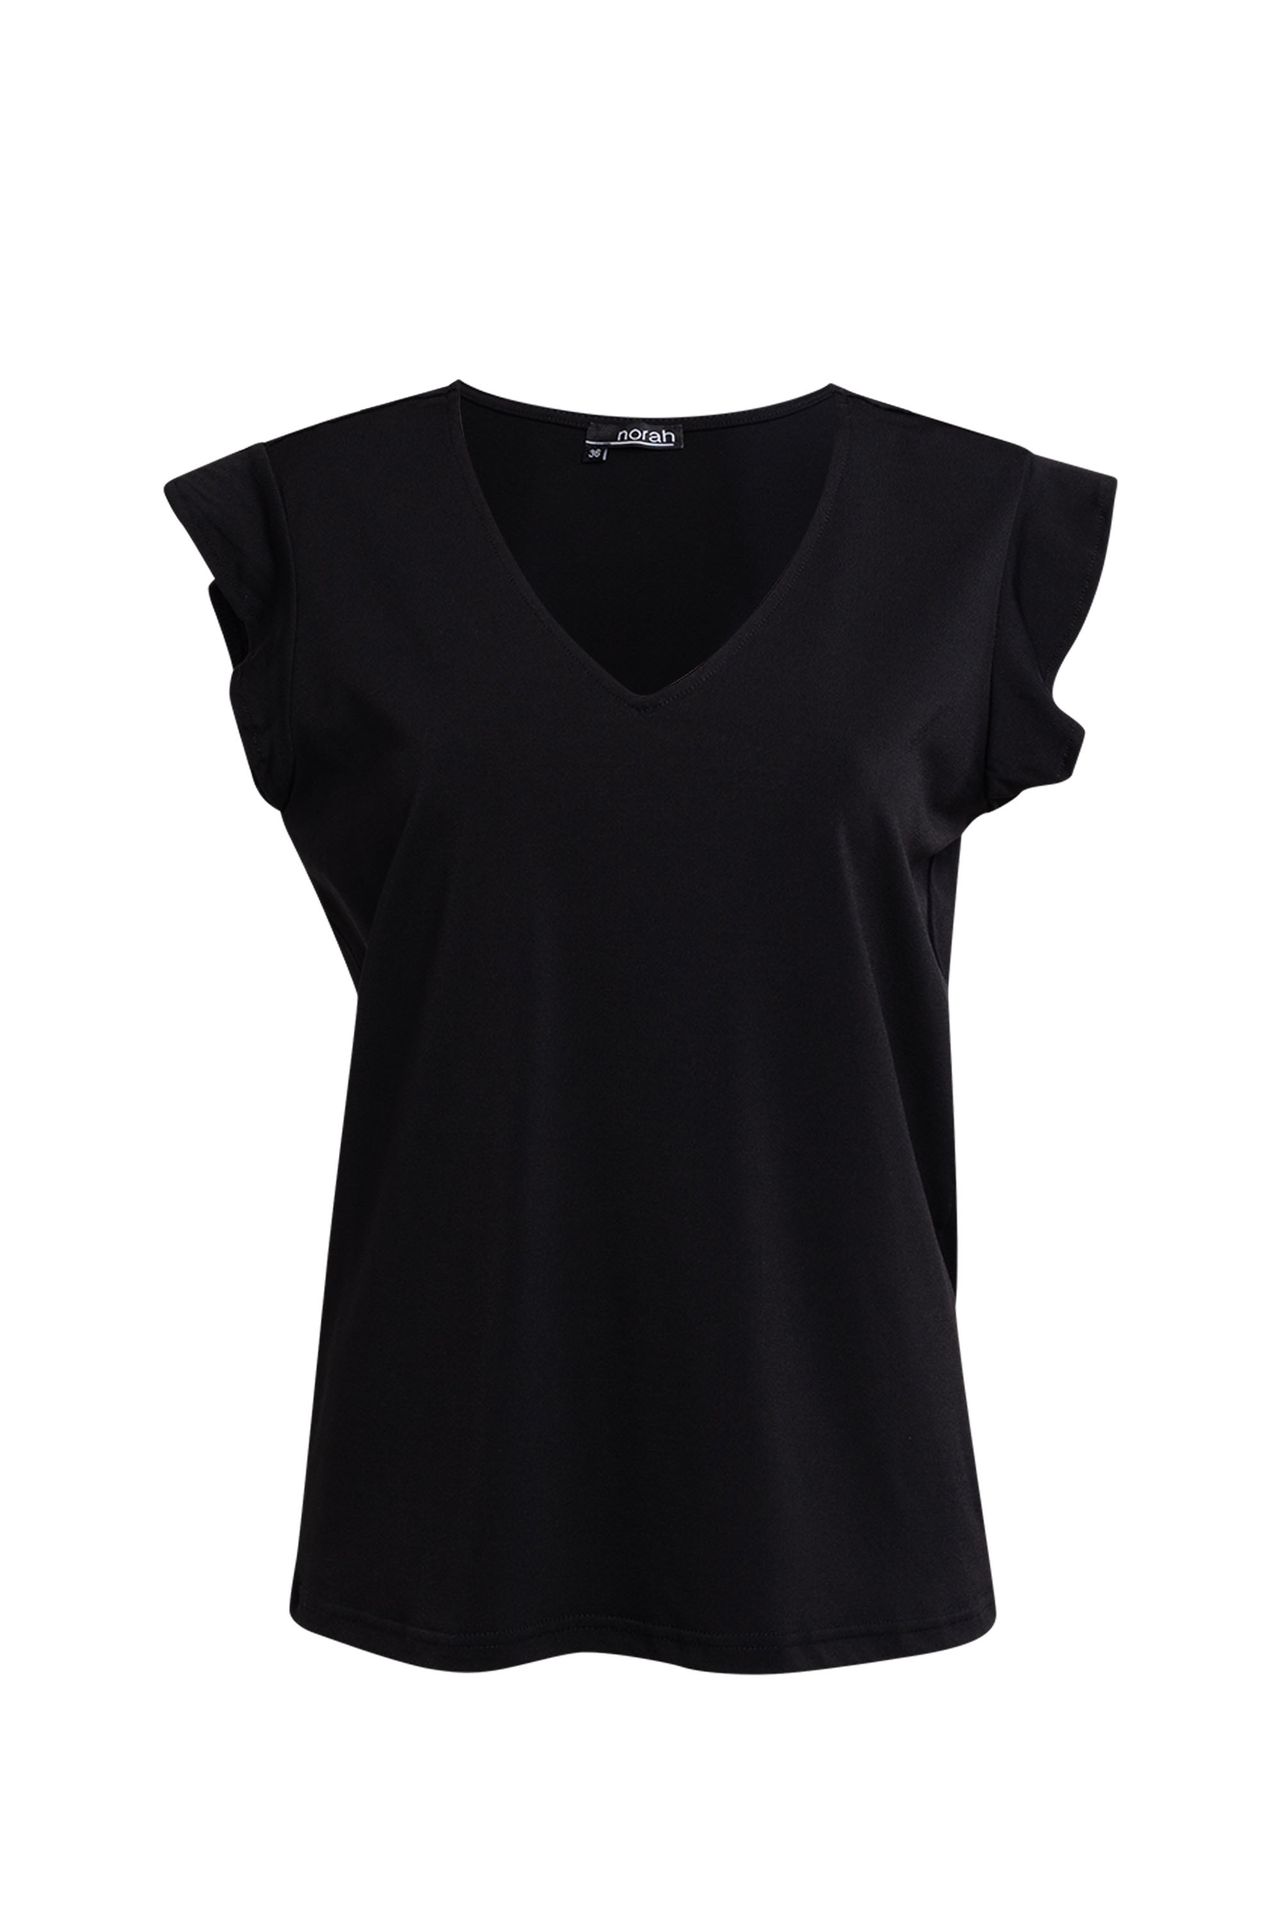 Norah Shirt zwart black 211241-001